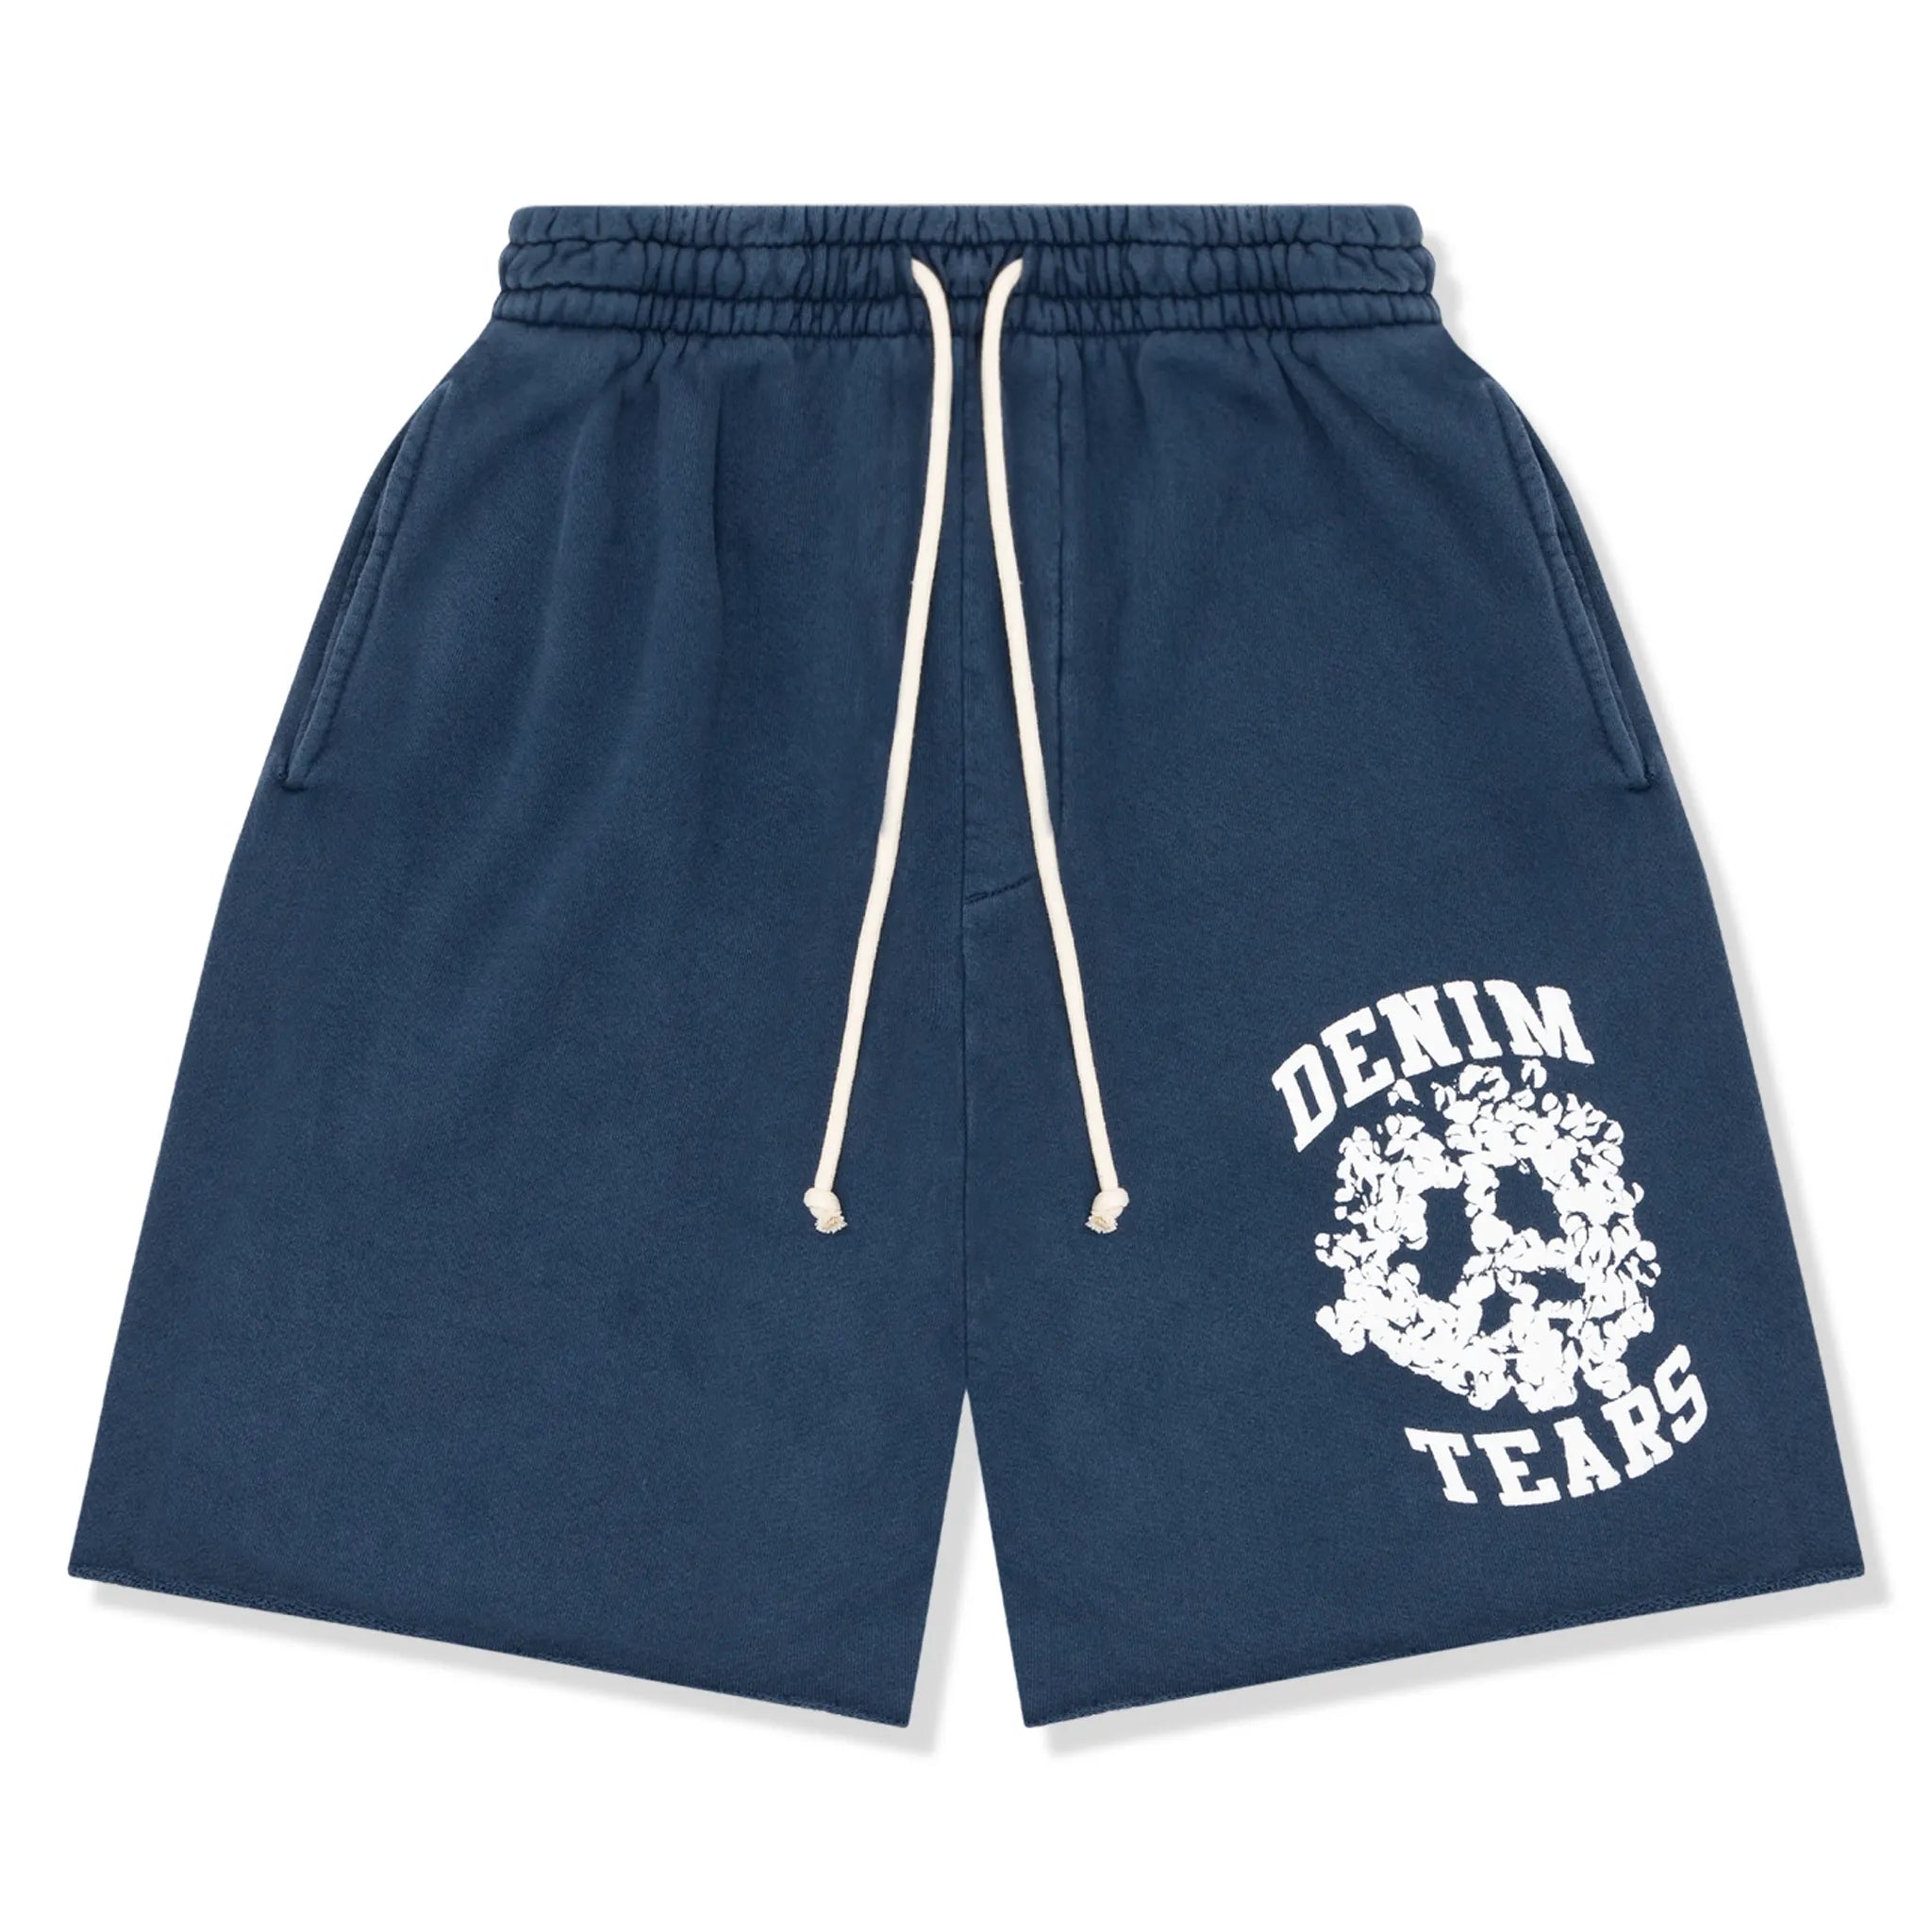 Front view of Denim Tears University Navy Shorts 402-080-27